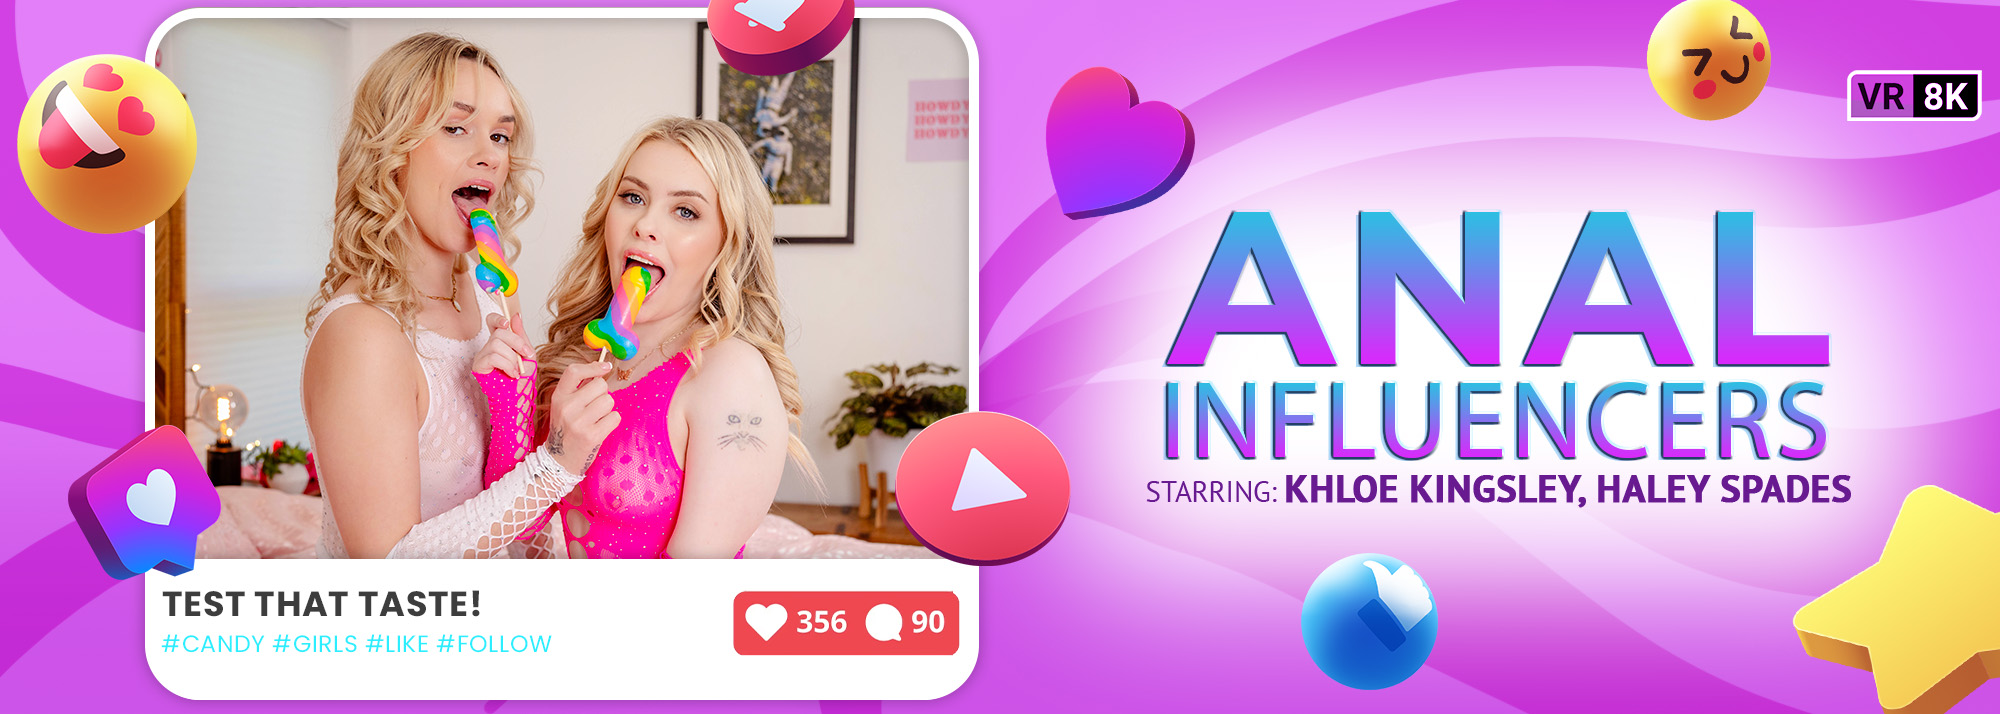 Anal Influencers - VR Porn Video, Starring: Khloe Kingsley, Haley Spades